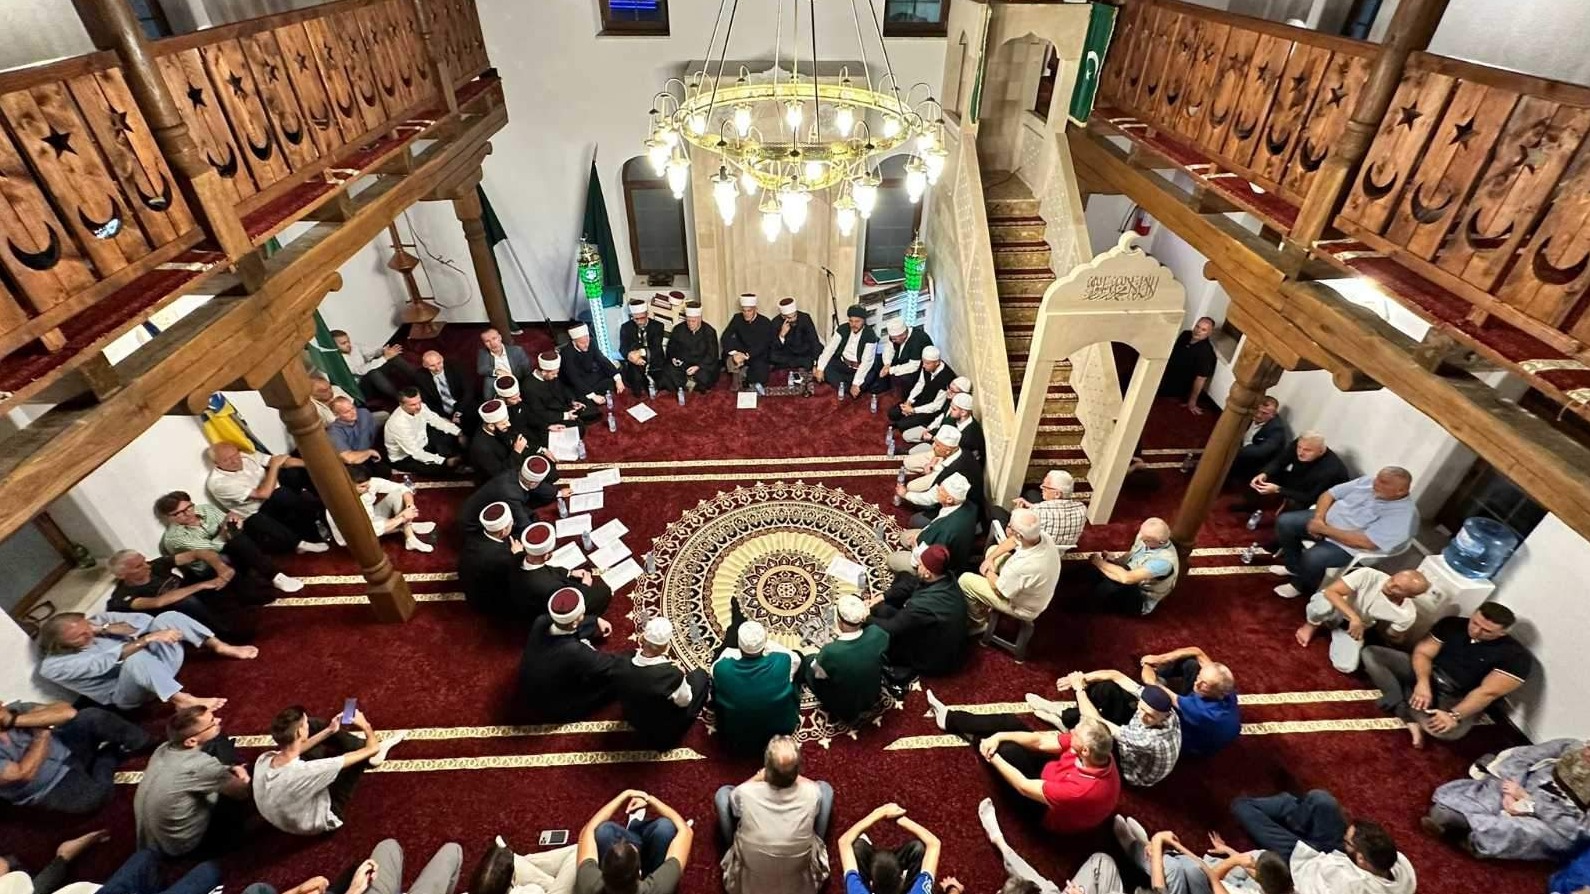 Proučen mevlud i kelimei-tevhid povodom otvorenja Čaršijske džamije u Bosanskoj Dubici